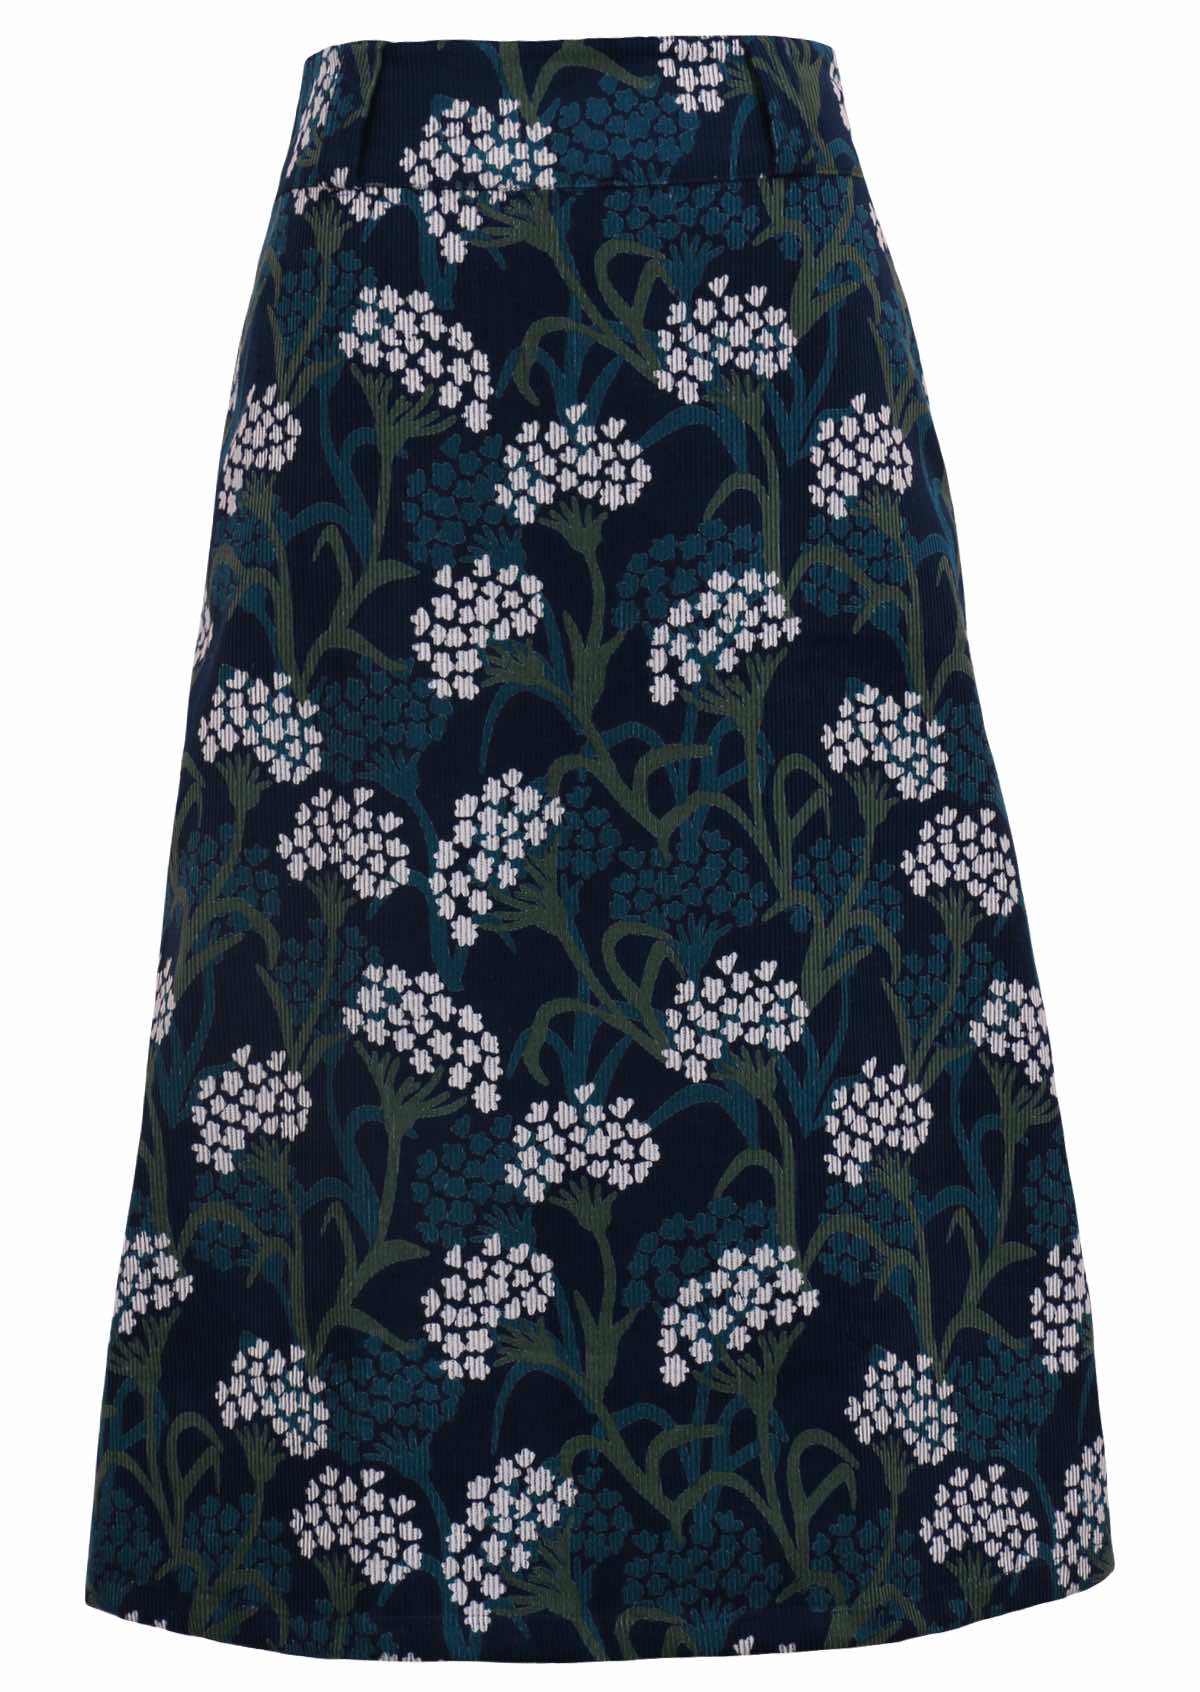 Floral print 100% cotton corduroy skirt that has an A-line shape. 